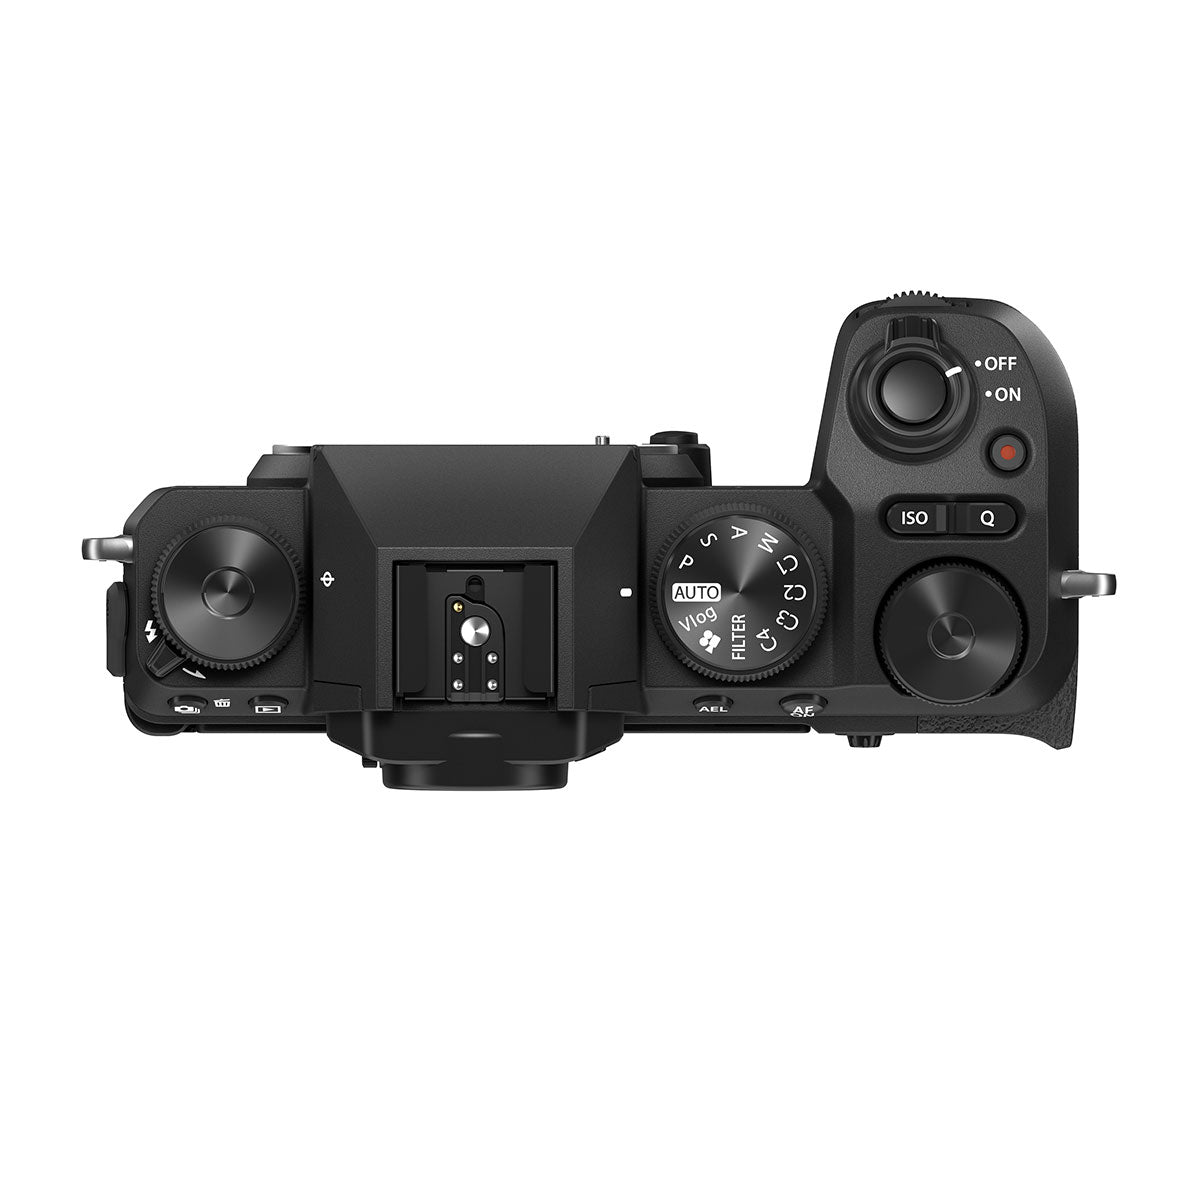 Fujifilm X-S20 Camera w/ XF 18-55mm Lens (Black)